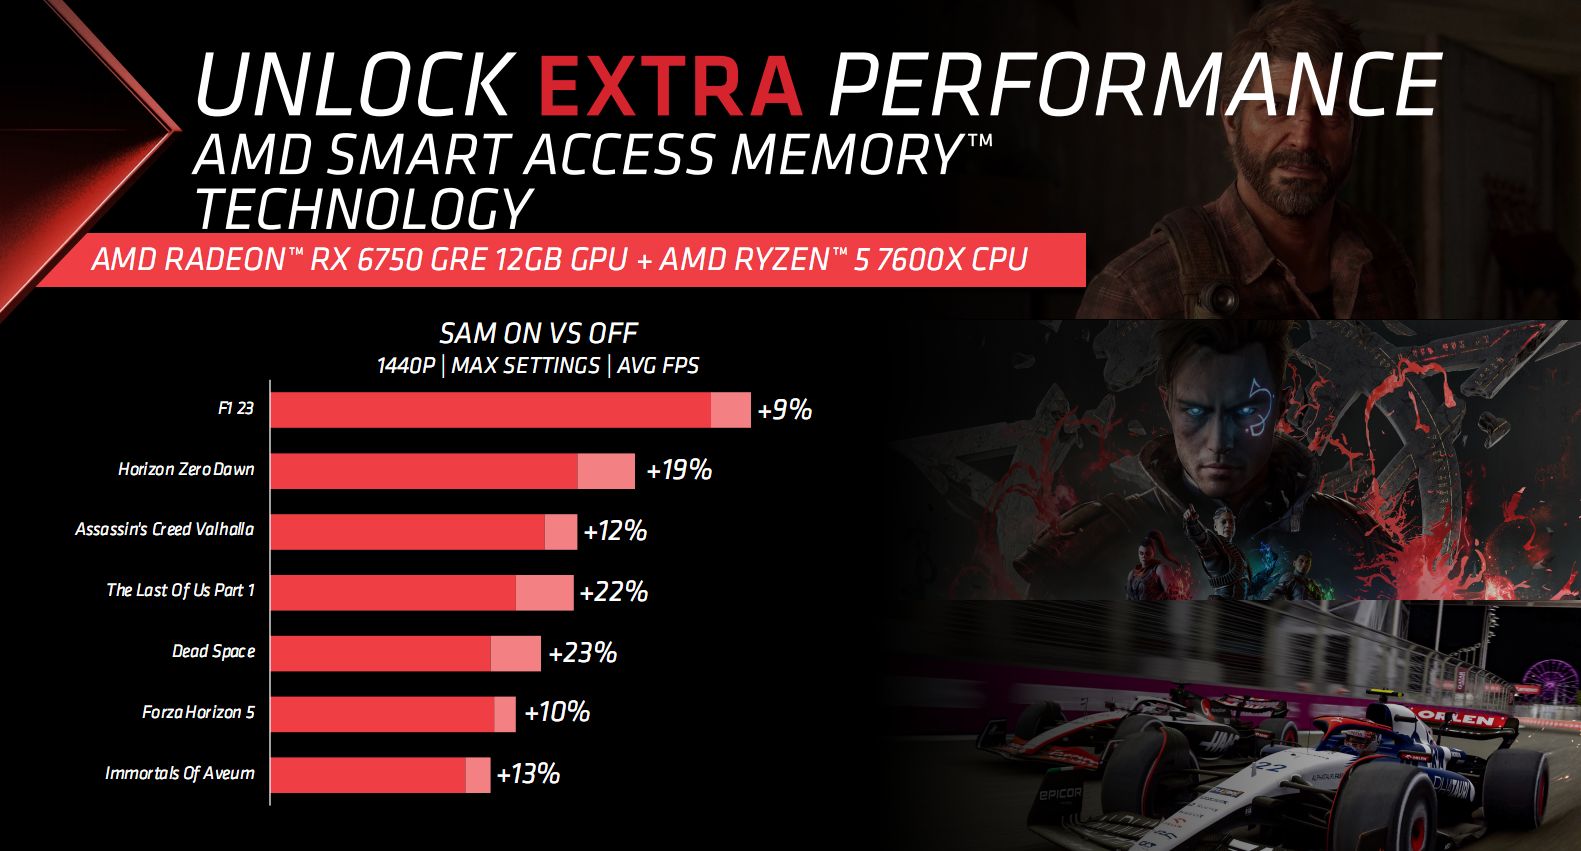 AMD Radeon RX 6750 XT Specs